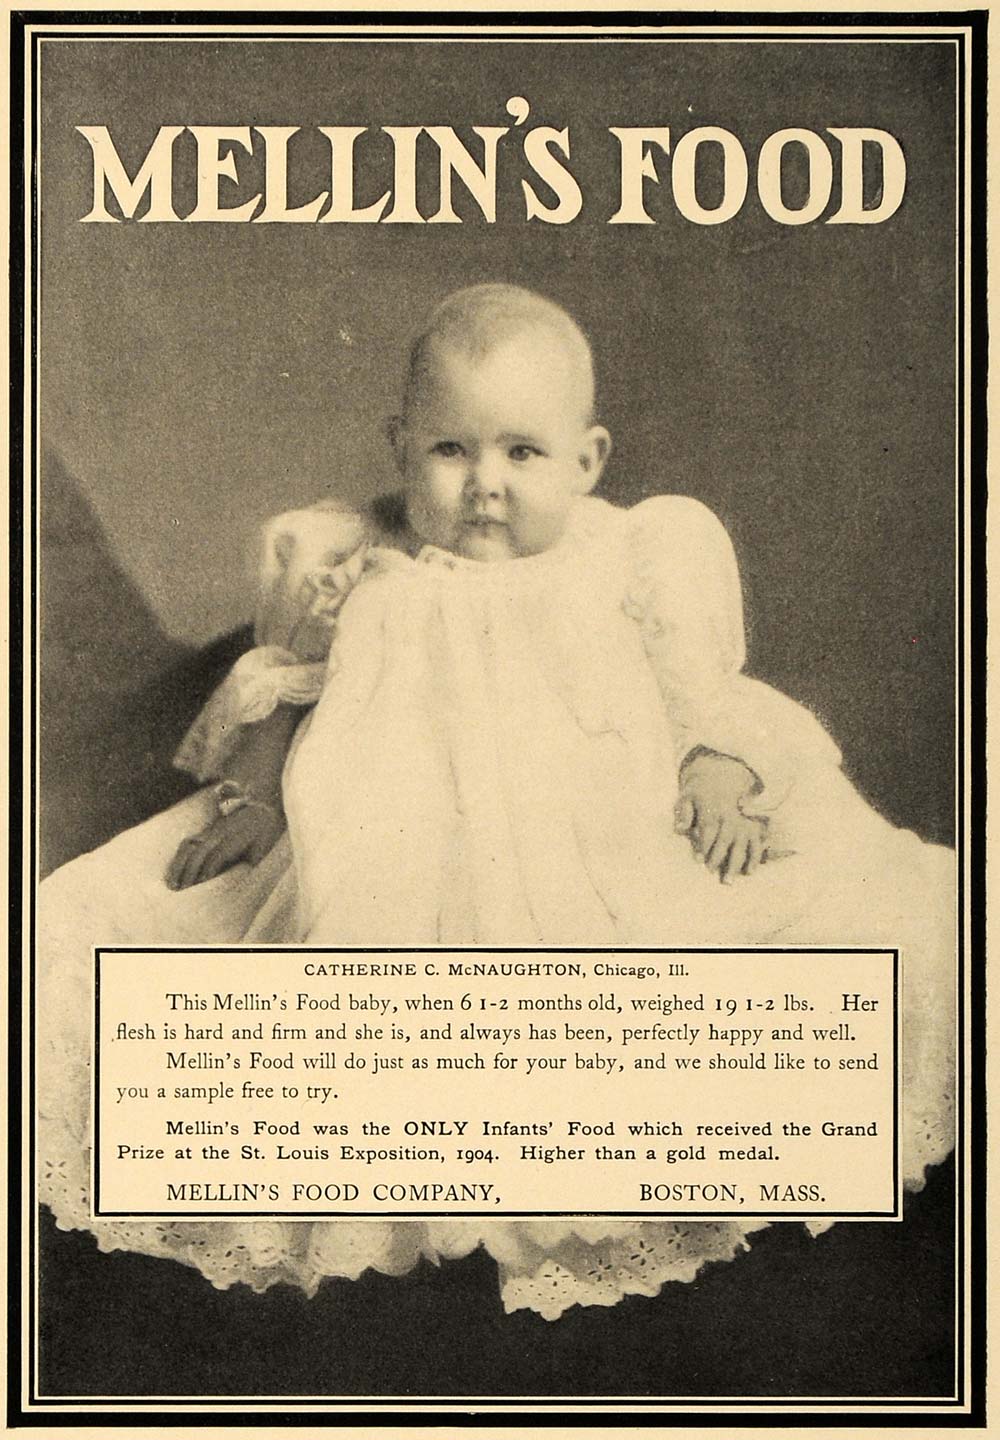 1905 Ad Catherine McNaughton Mellins Food Baby Company - ORIGINAL CL7